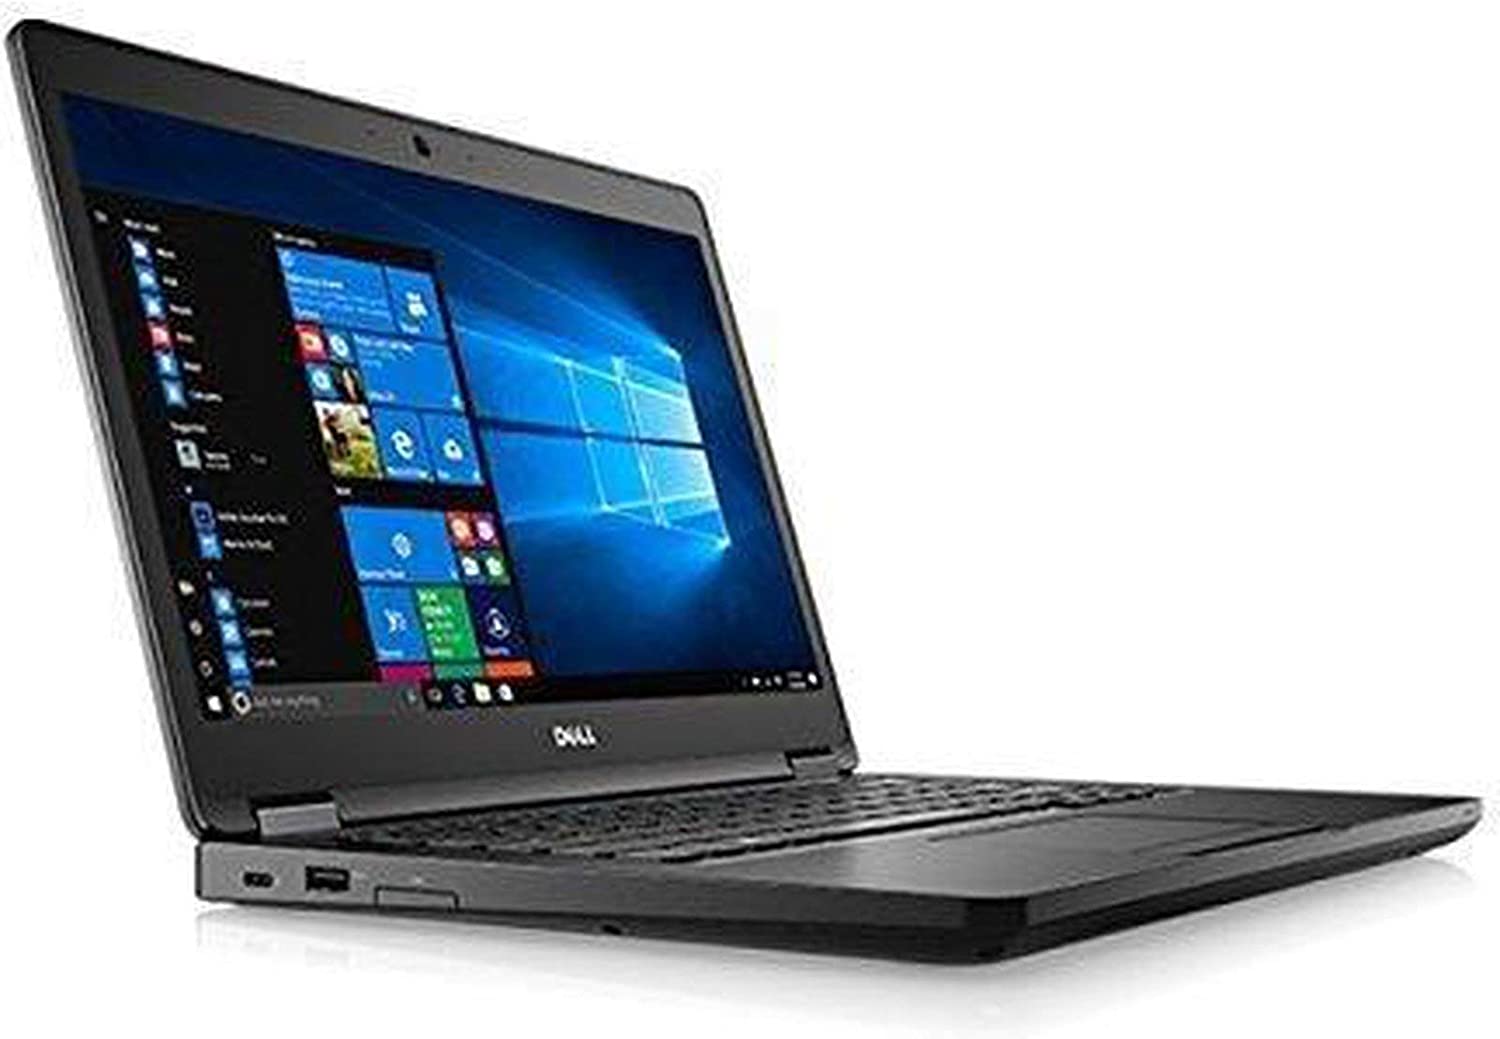  Dell Latitude 5480 14-Inch Laptop HDMI USB 3.0 Black i5 6200U 2.30 GHz 8GB RAM 240GB SSD Windows 10 Pro (Refurbished)